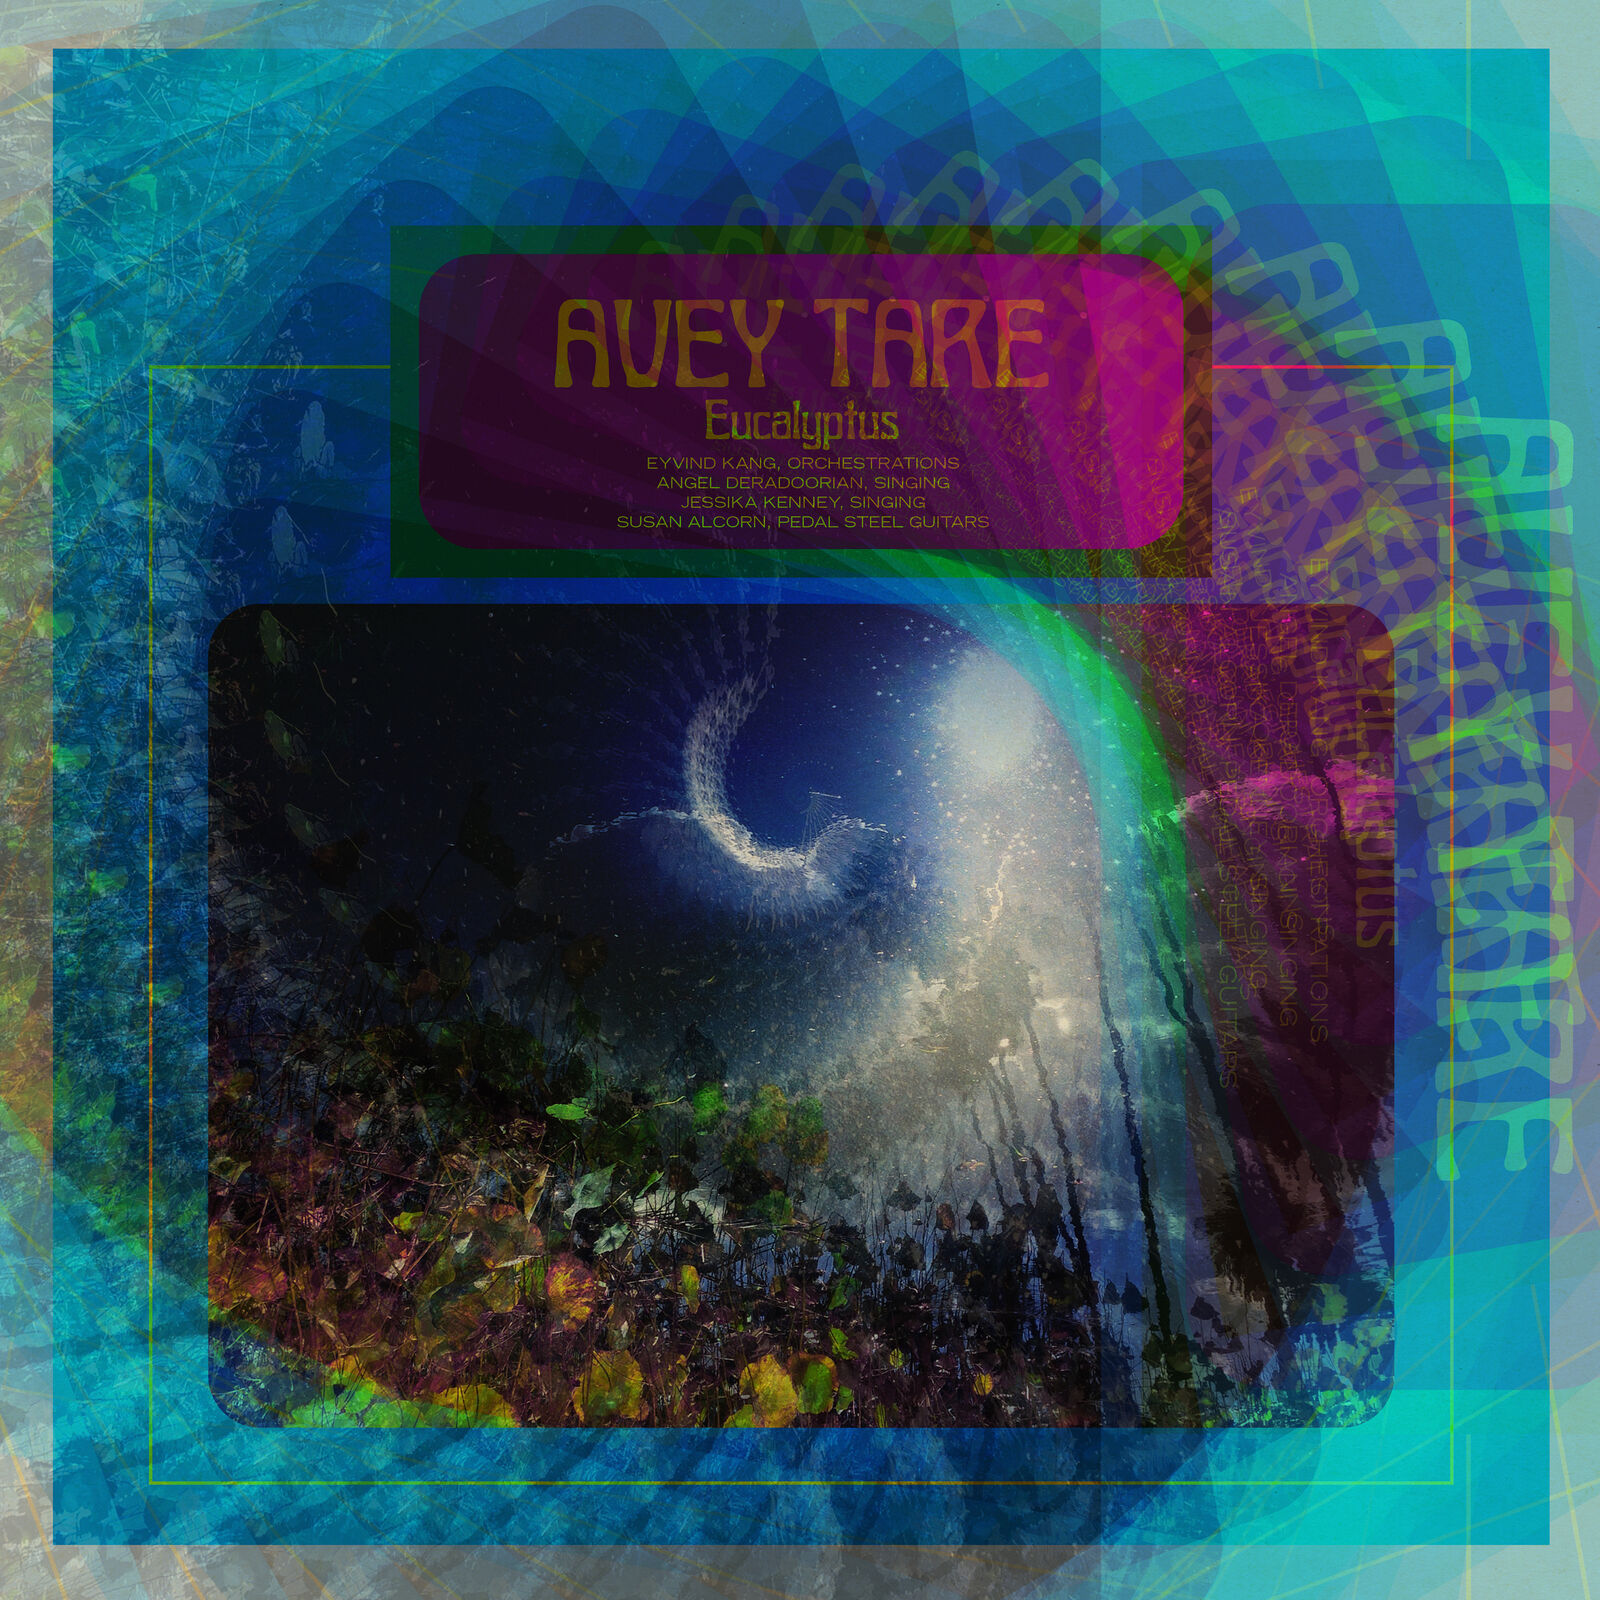 Avey Tare Eucalyptus Records & LPs New